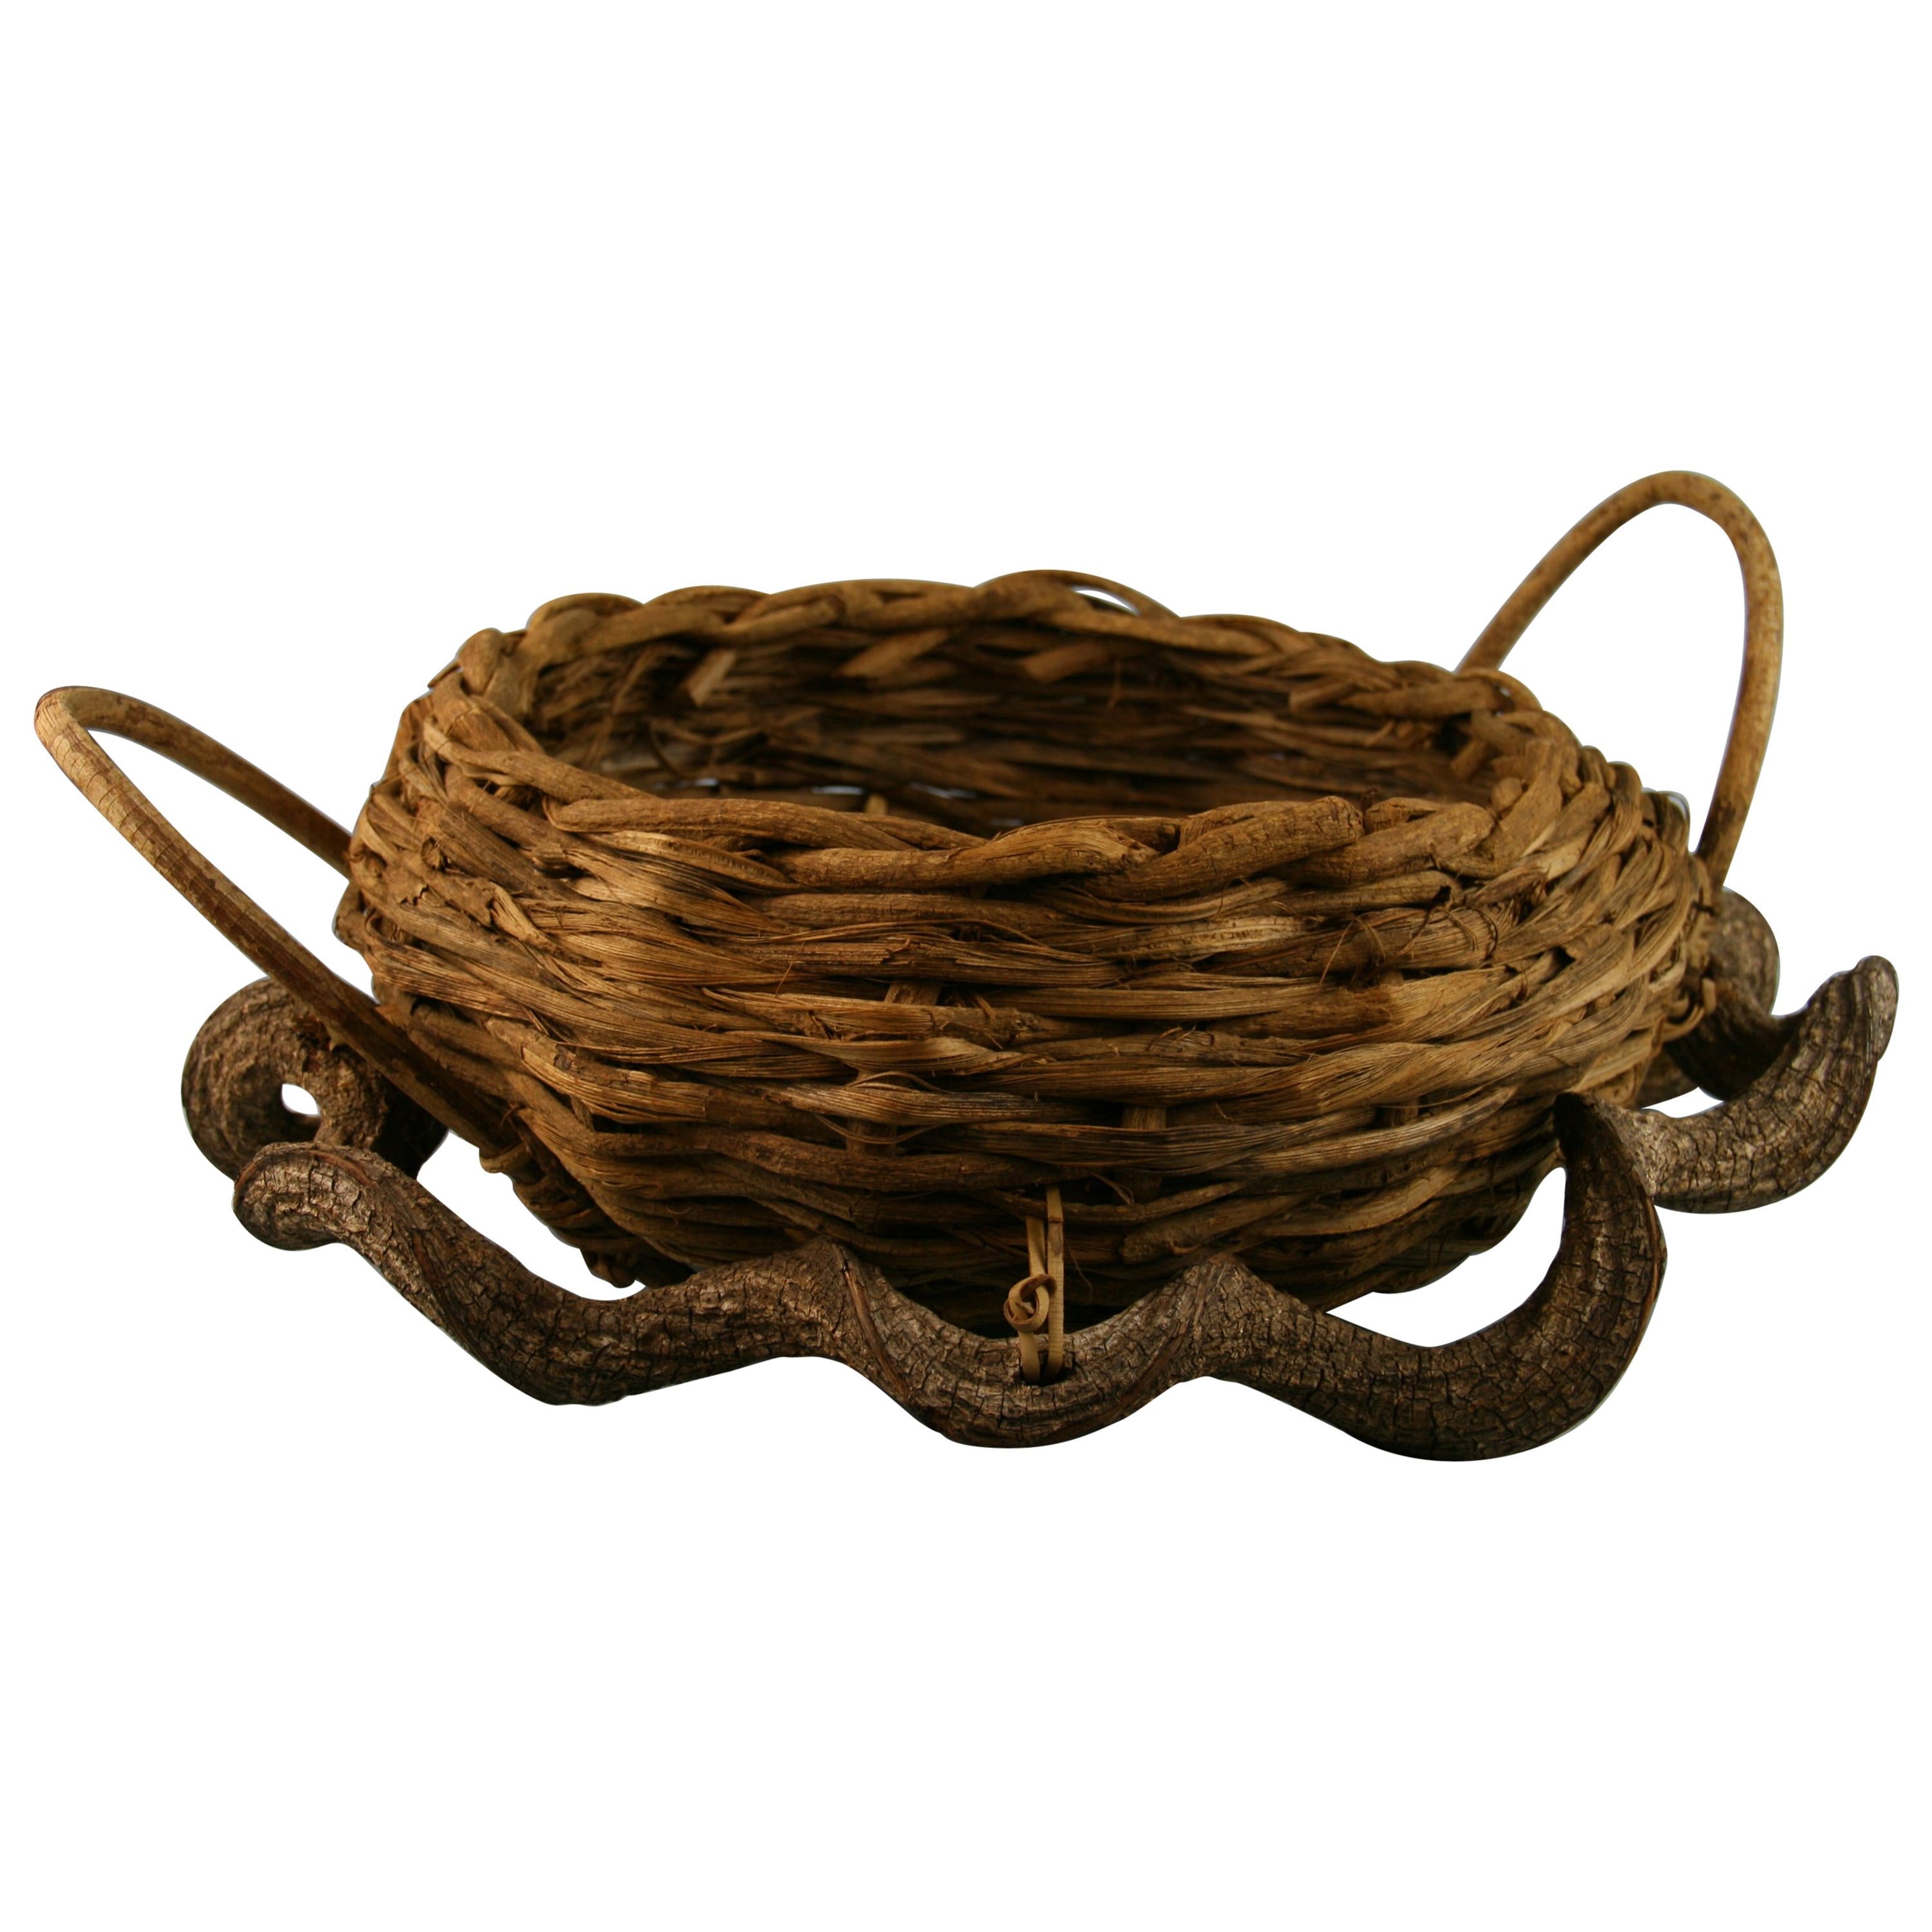 Japanese Twisted Branches and Twigs Garden Planter/Centerpiece/Folk Art Basket